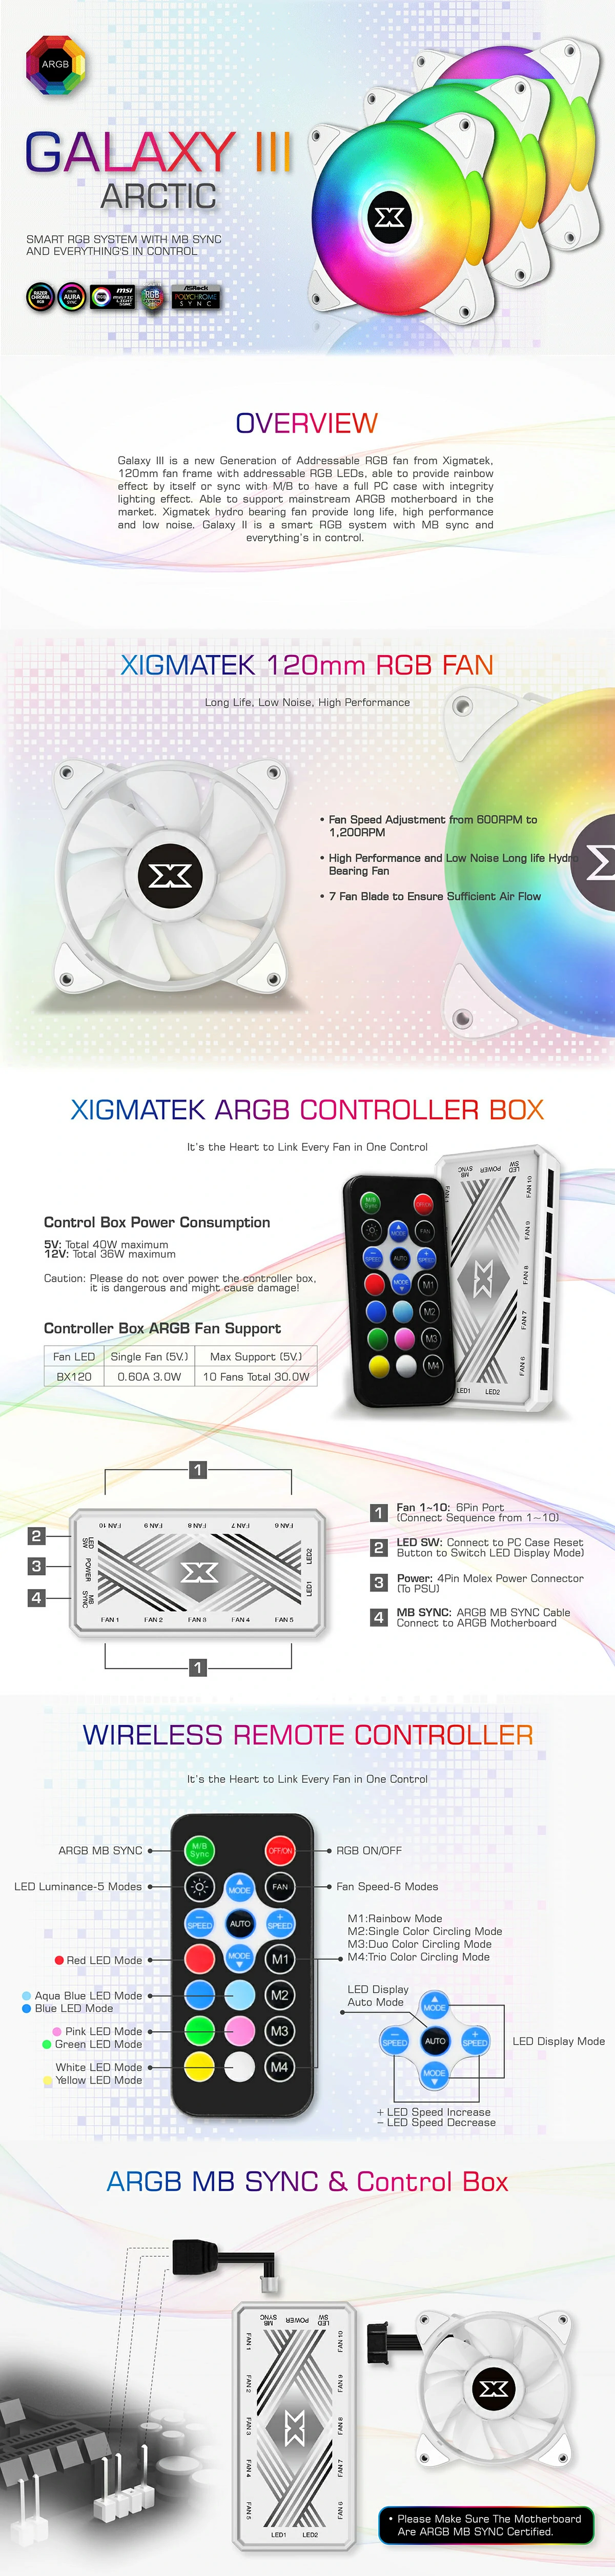 Overview - Xigmatek - Galaxy III Essential Arctic ARGB 3 Fan Pack